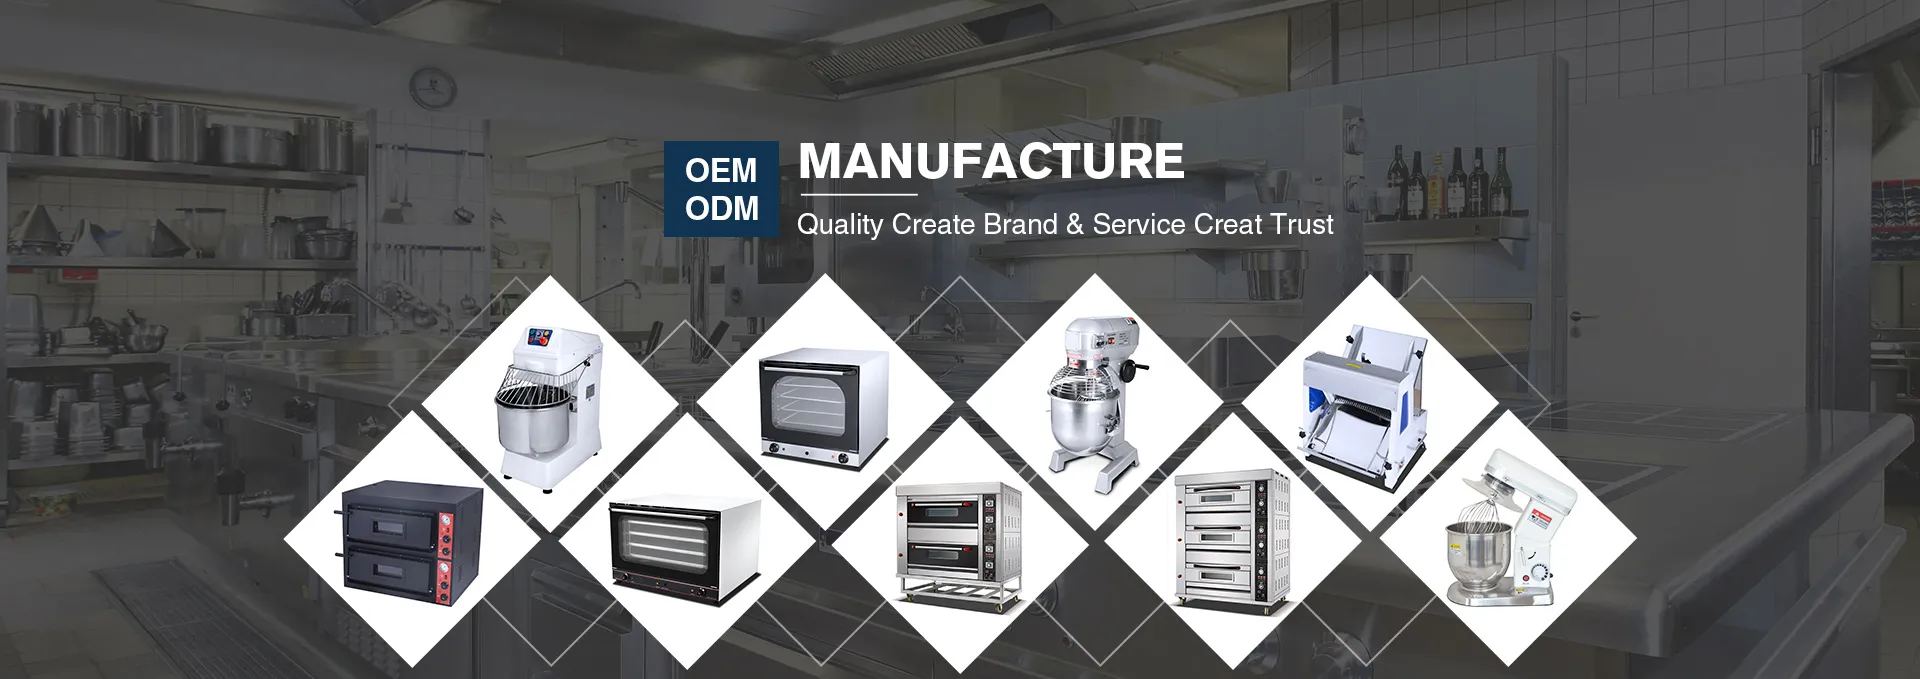 ODM Quality Создать бренд и сервис Creat Trust